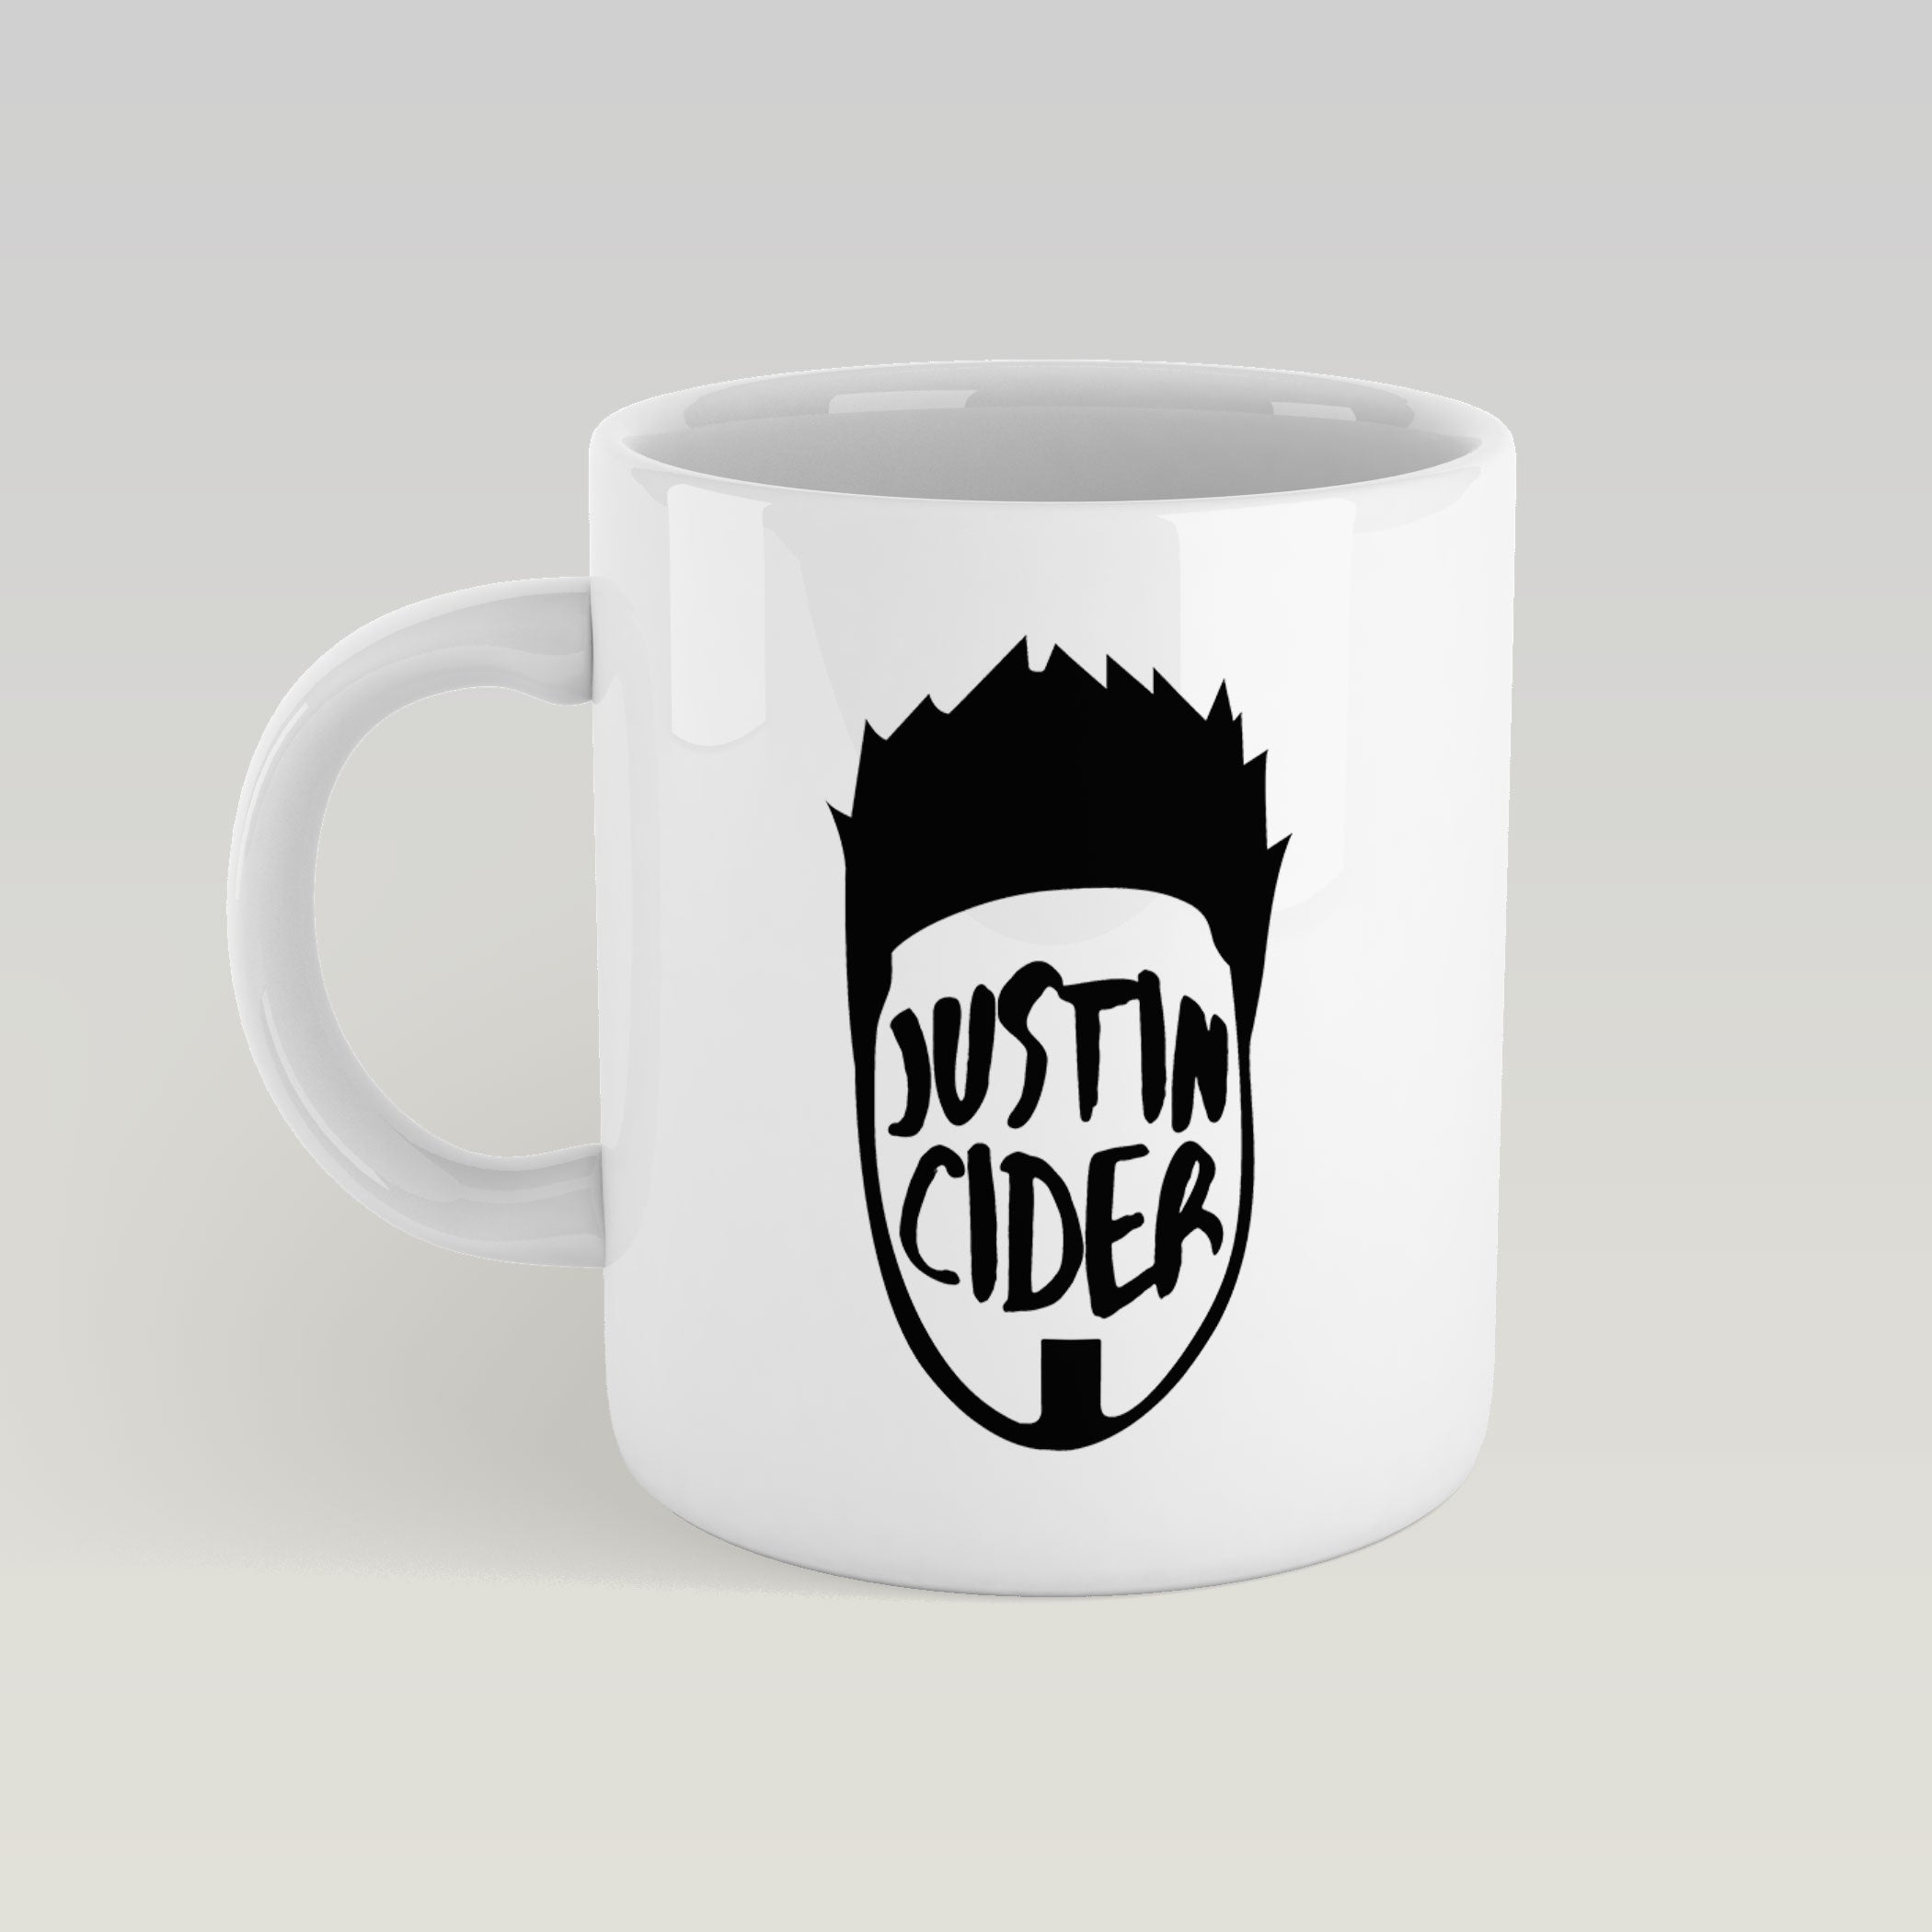 Justin Cider - Logo Mug